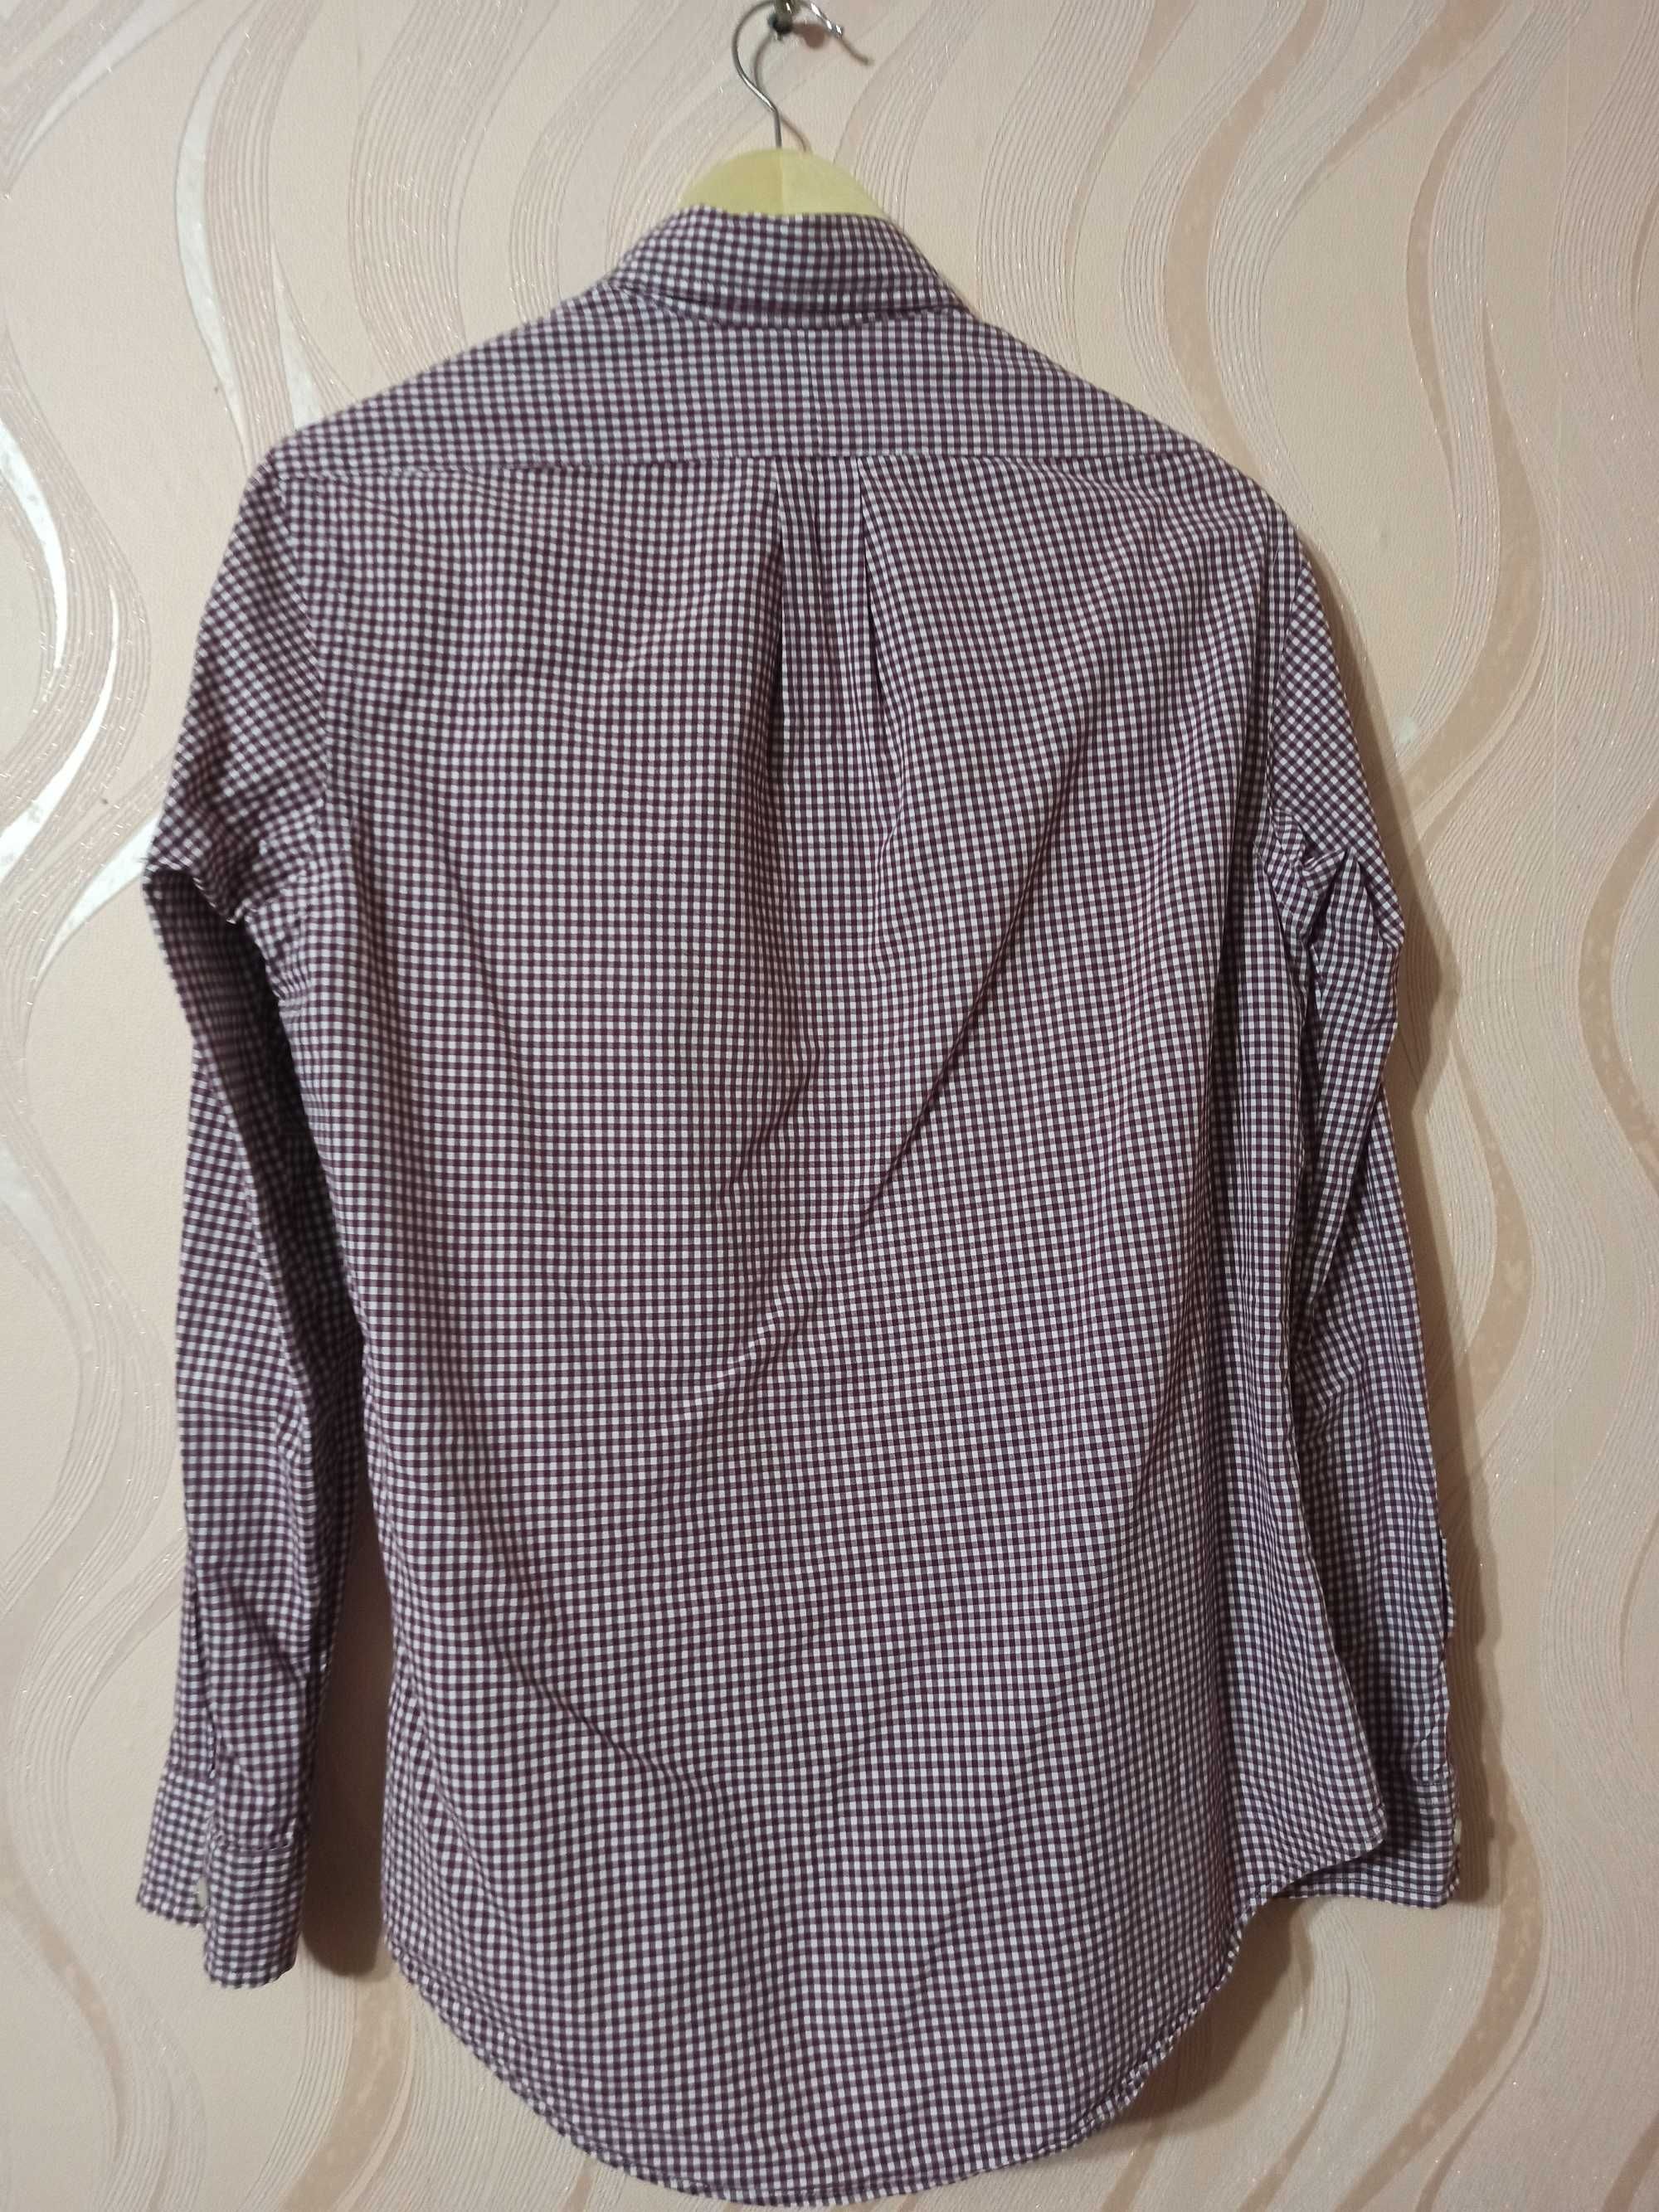 Рубашка чоловіча в клетку Polo Ralph Lauren - Сорочка олх доставка